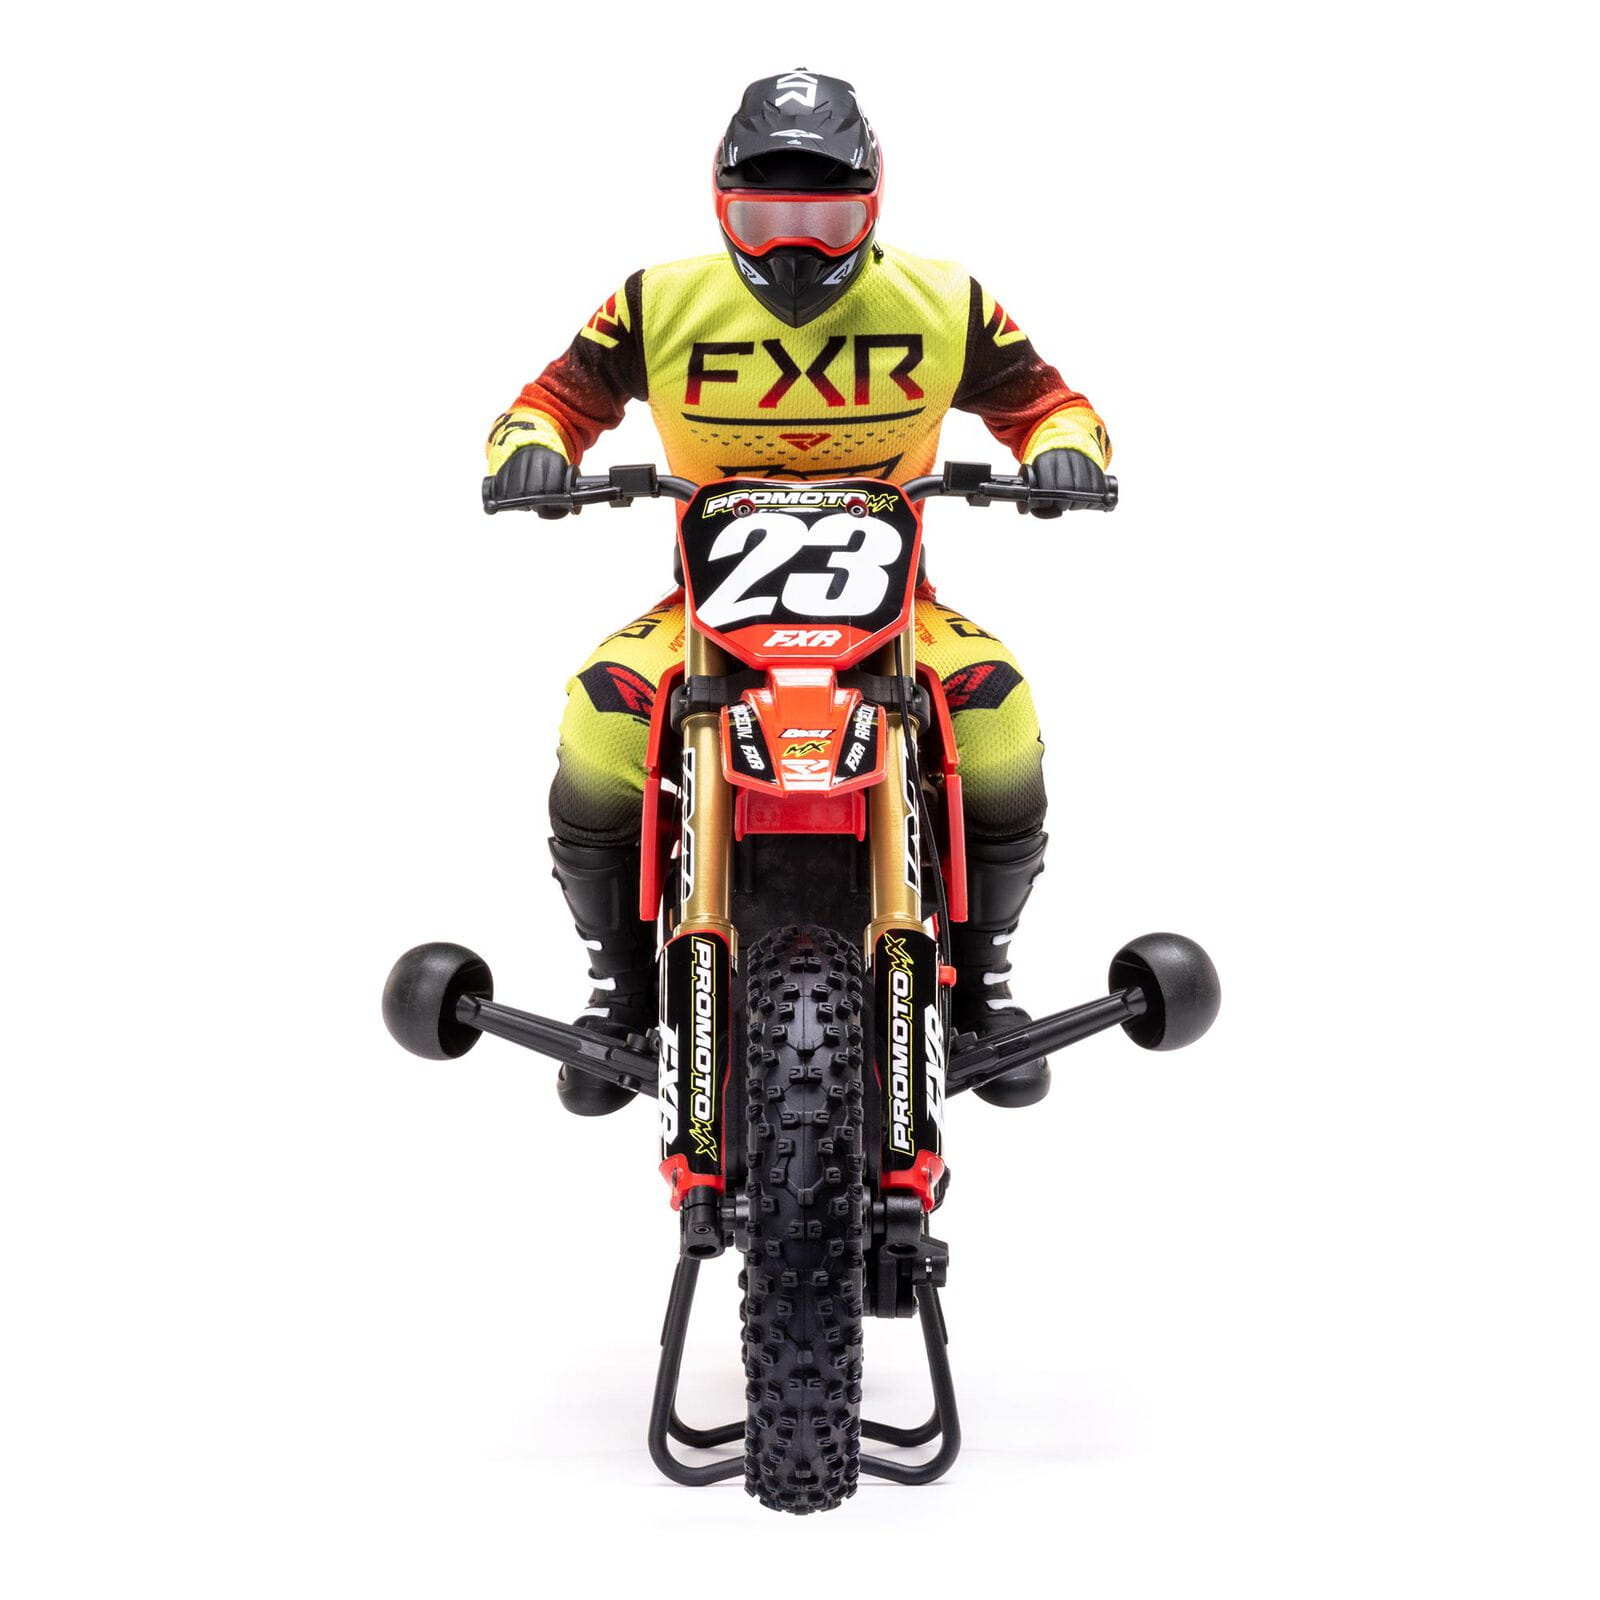 Losi Motocross RC Motorrad Promoto MX 1:4 RTR FXR Combo Pro Set